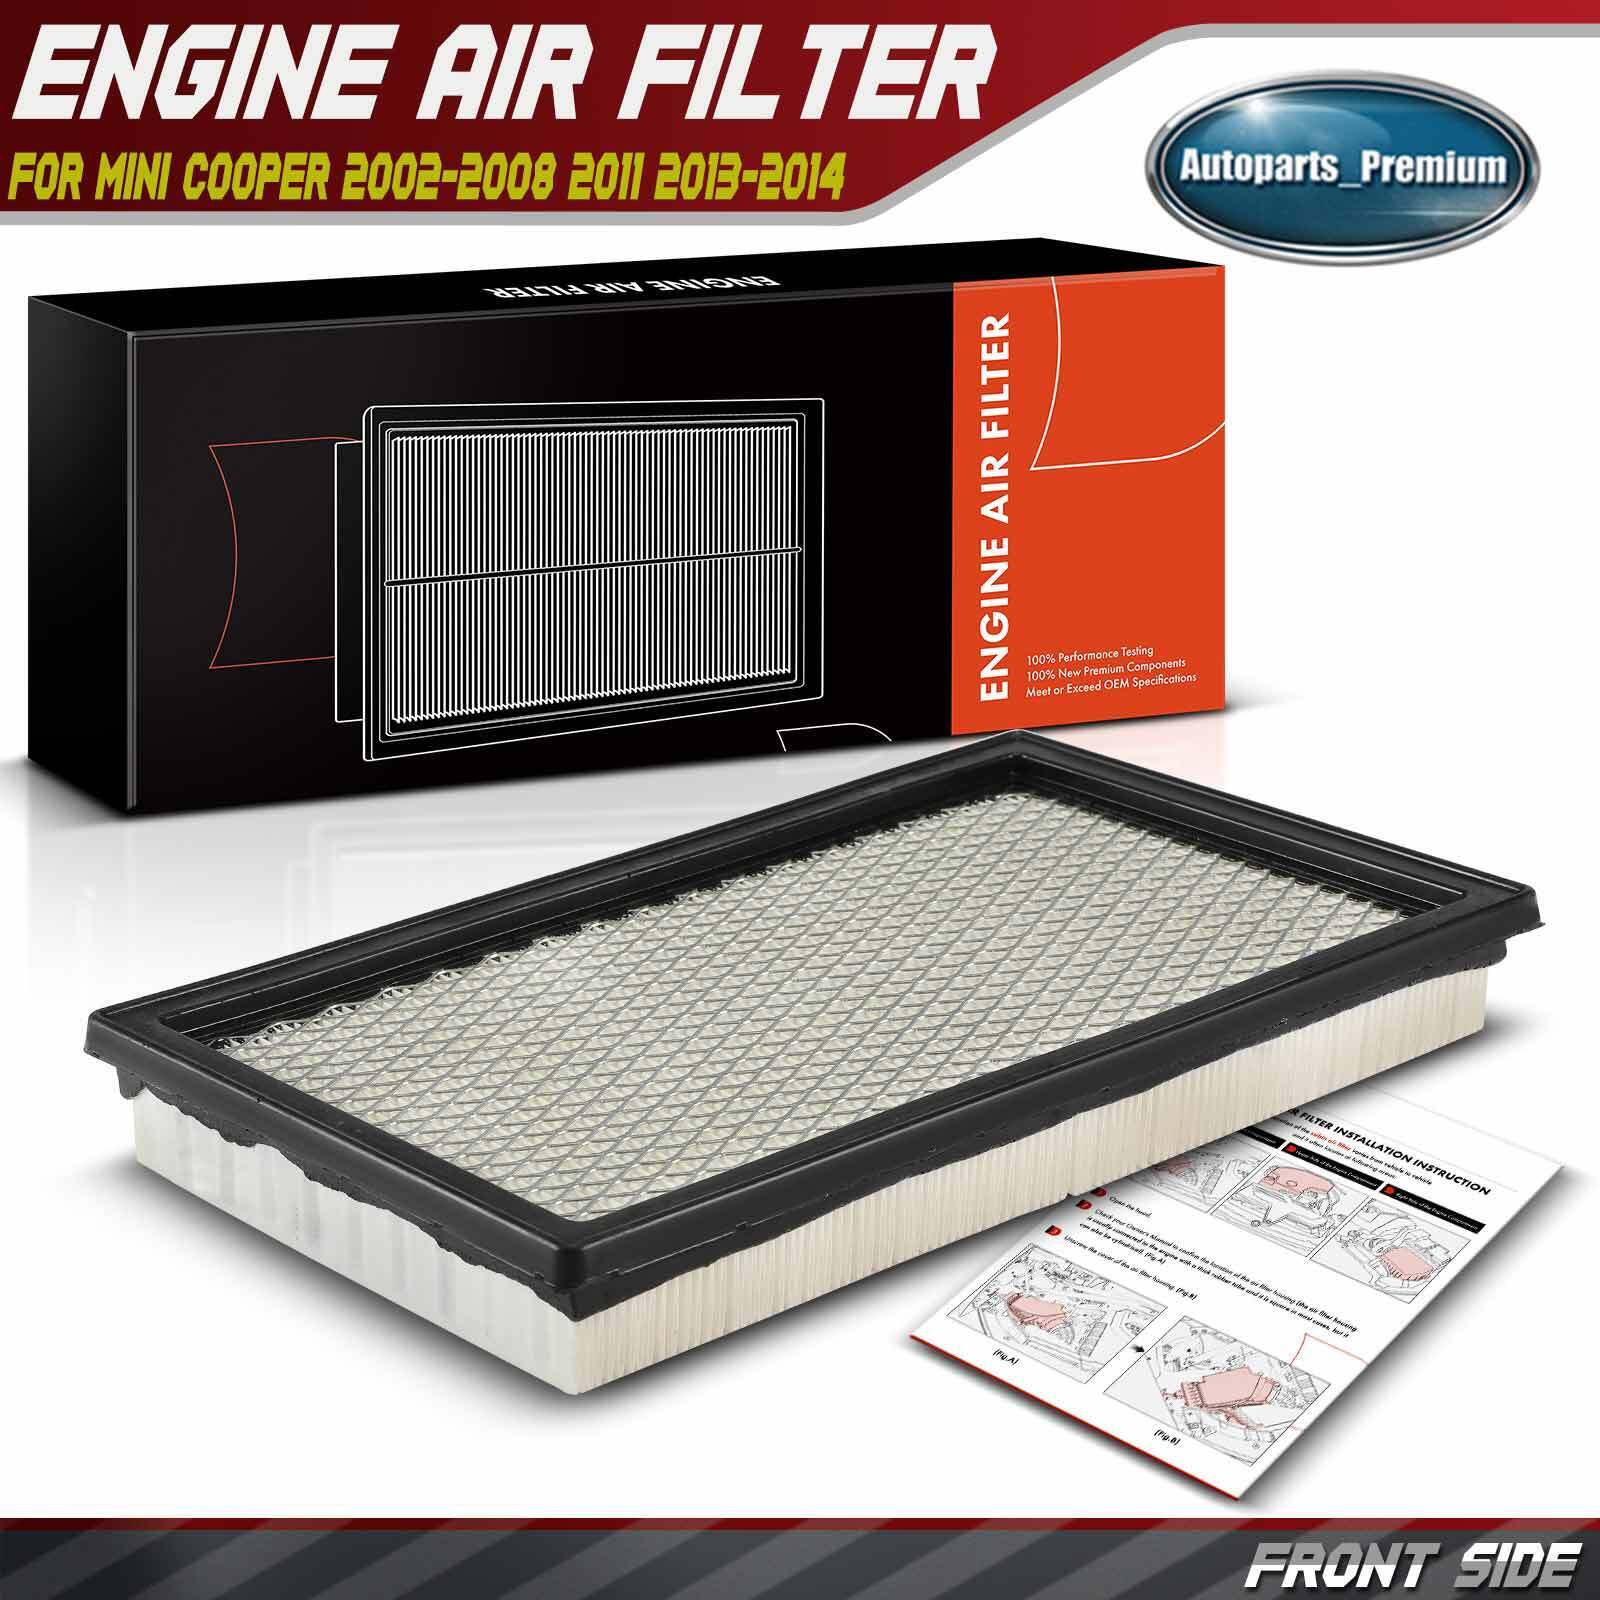 Engine Air Filter for Mini Cooper 2002-2008 2011 2013-2014 L4 1.6L 13721491749